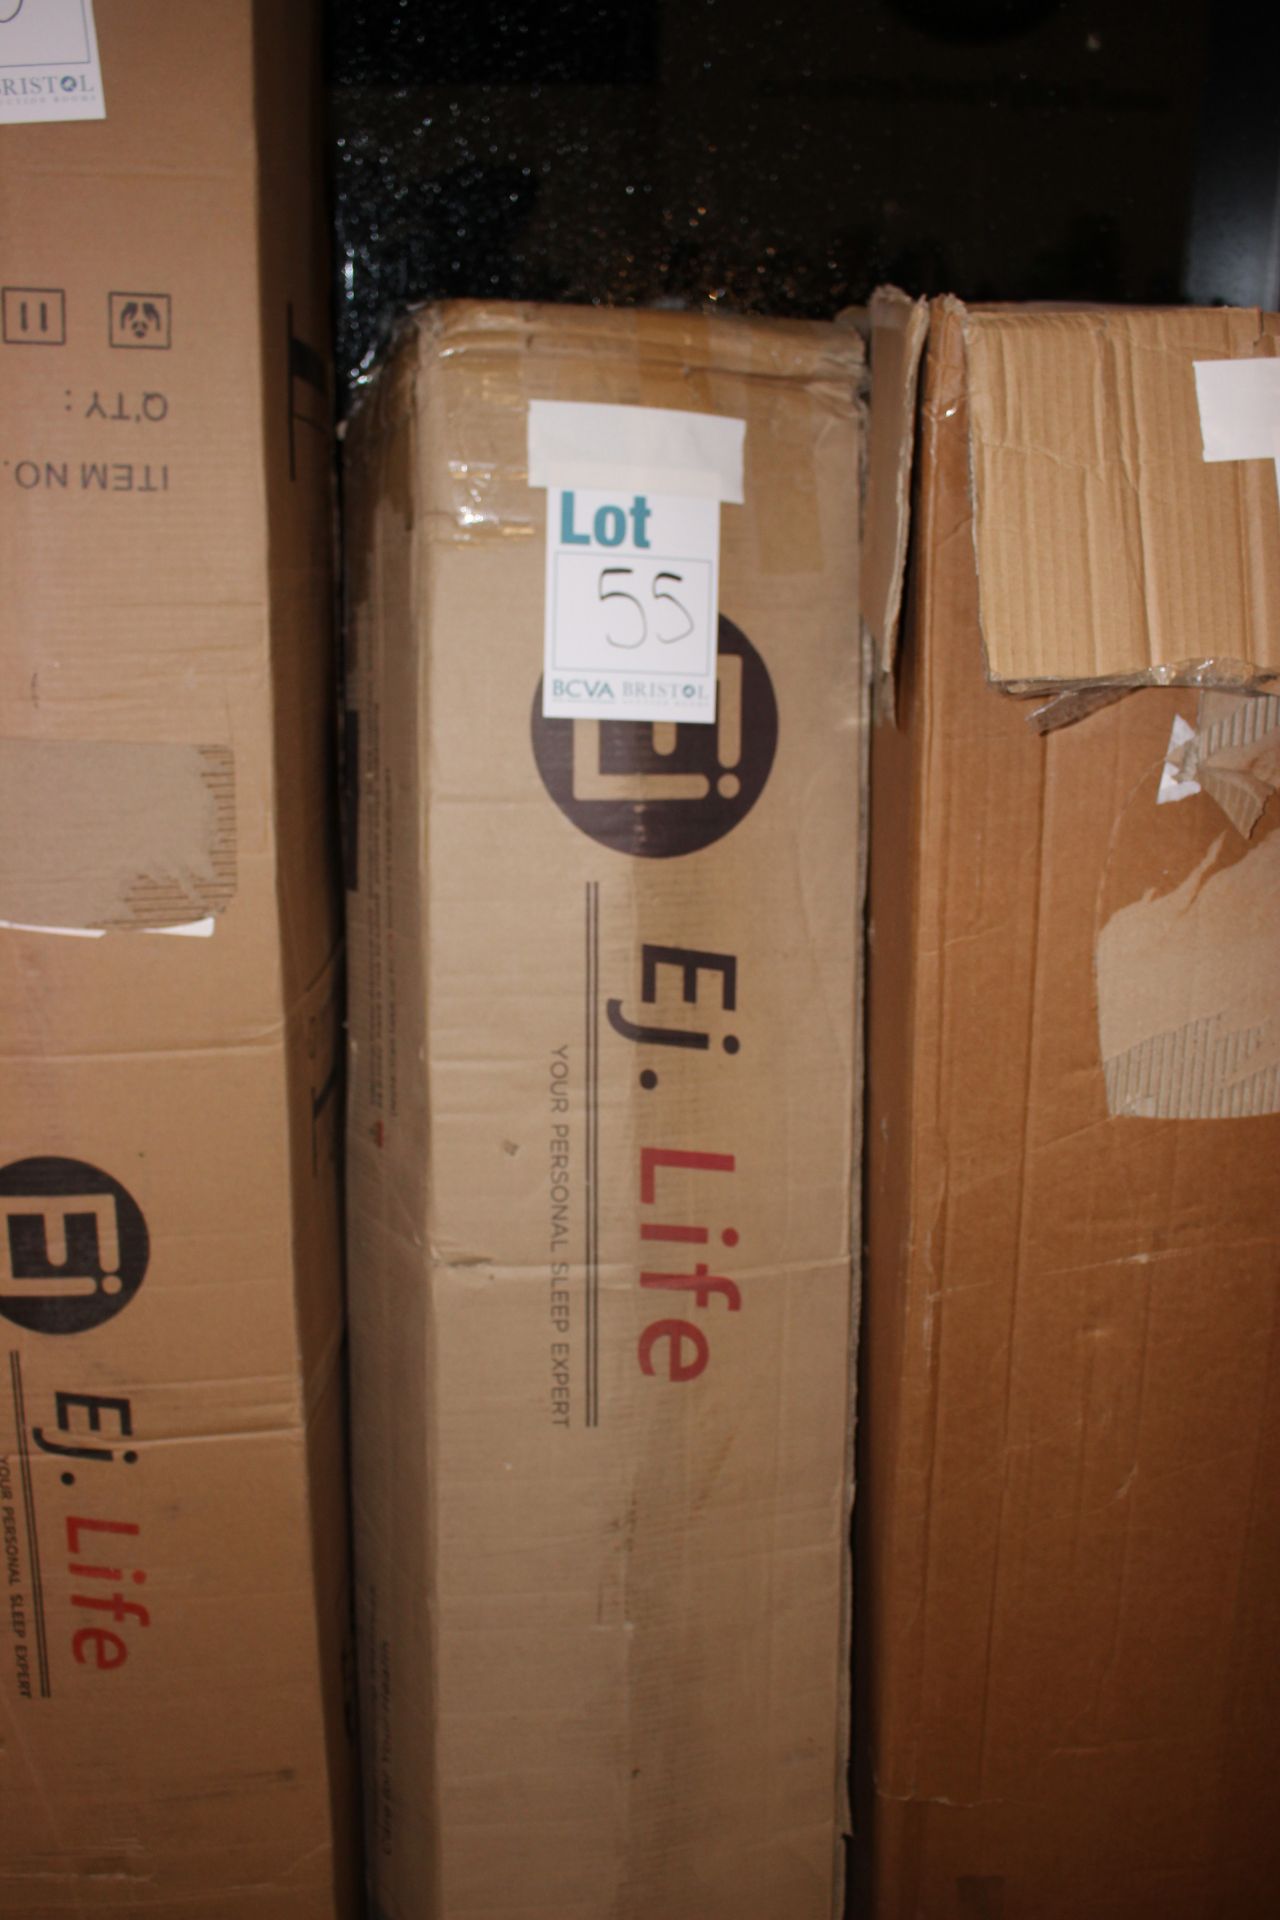 An Ej Life mattress - GB/BG239.